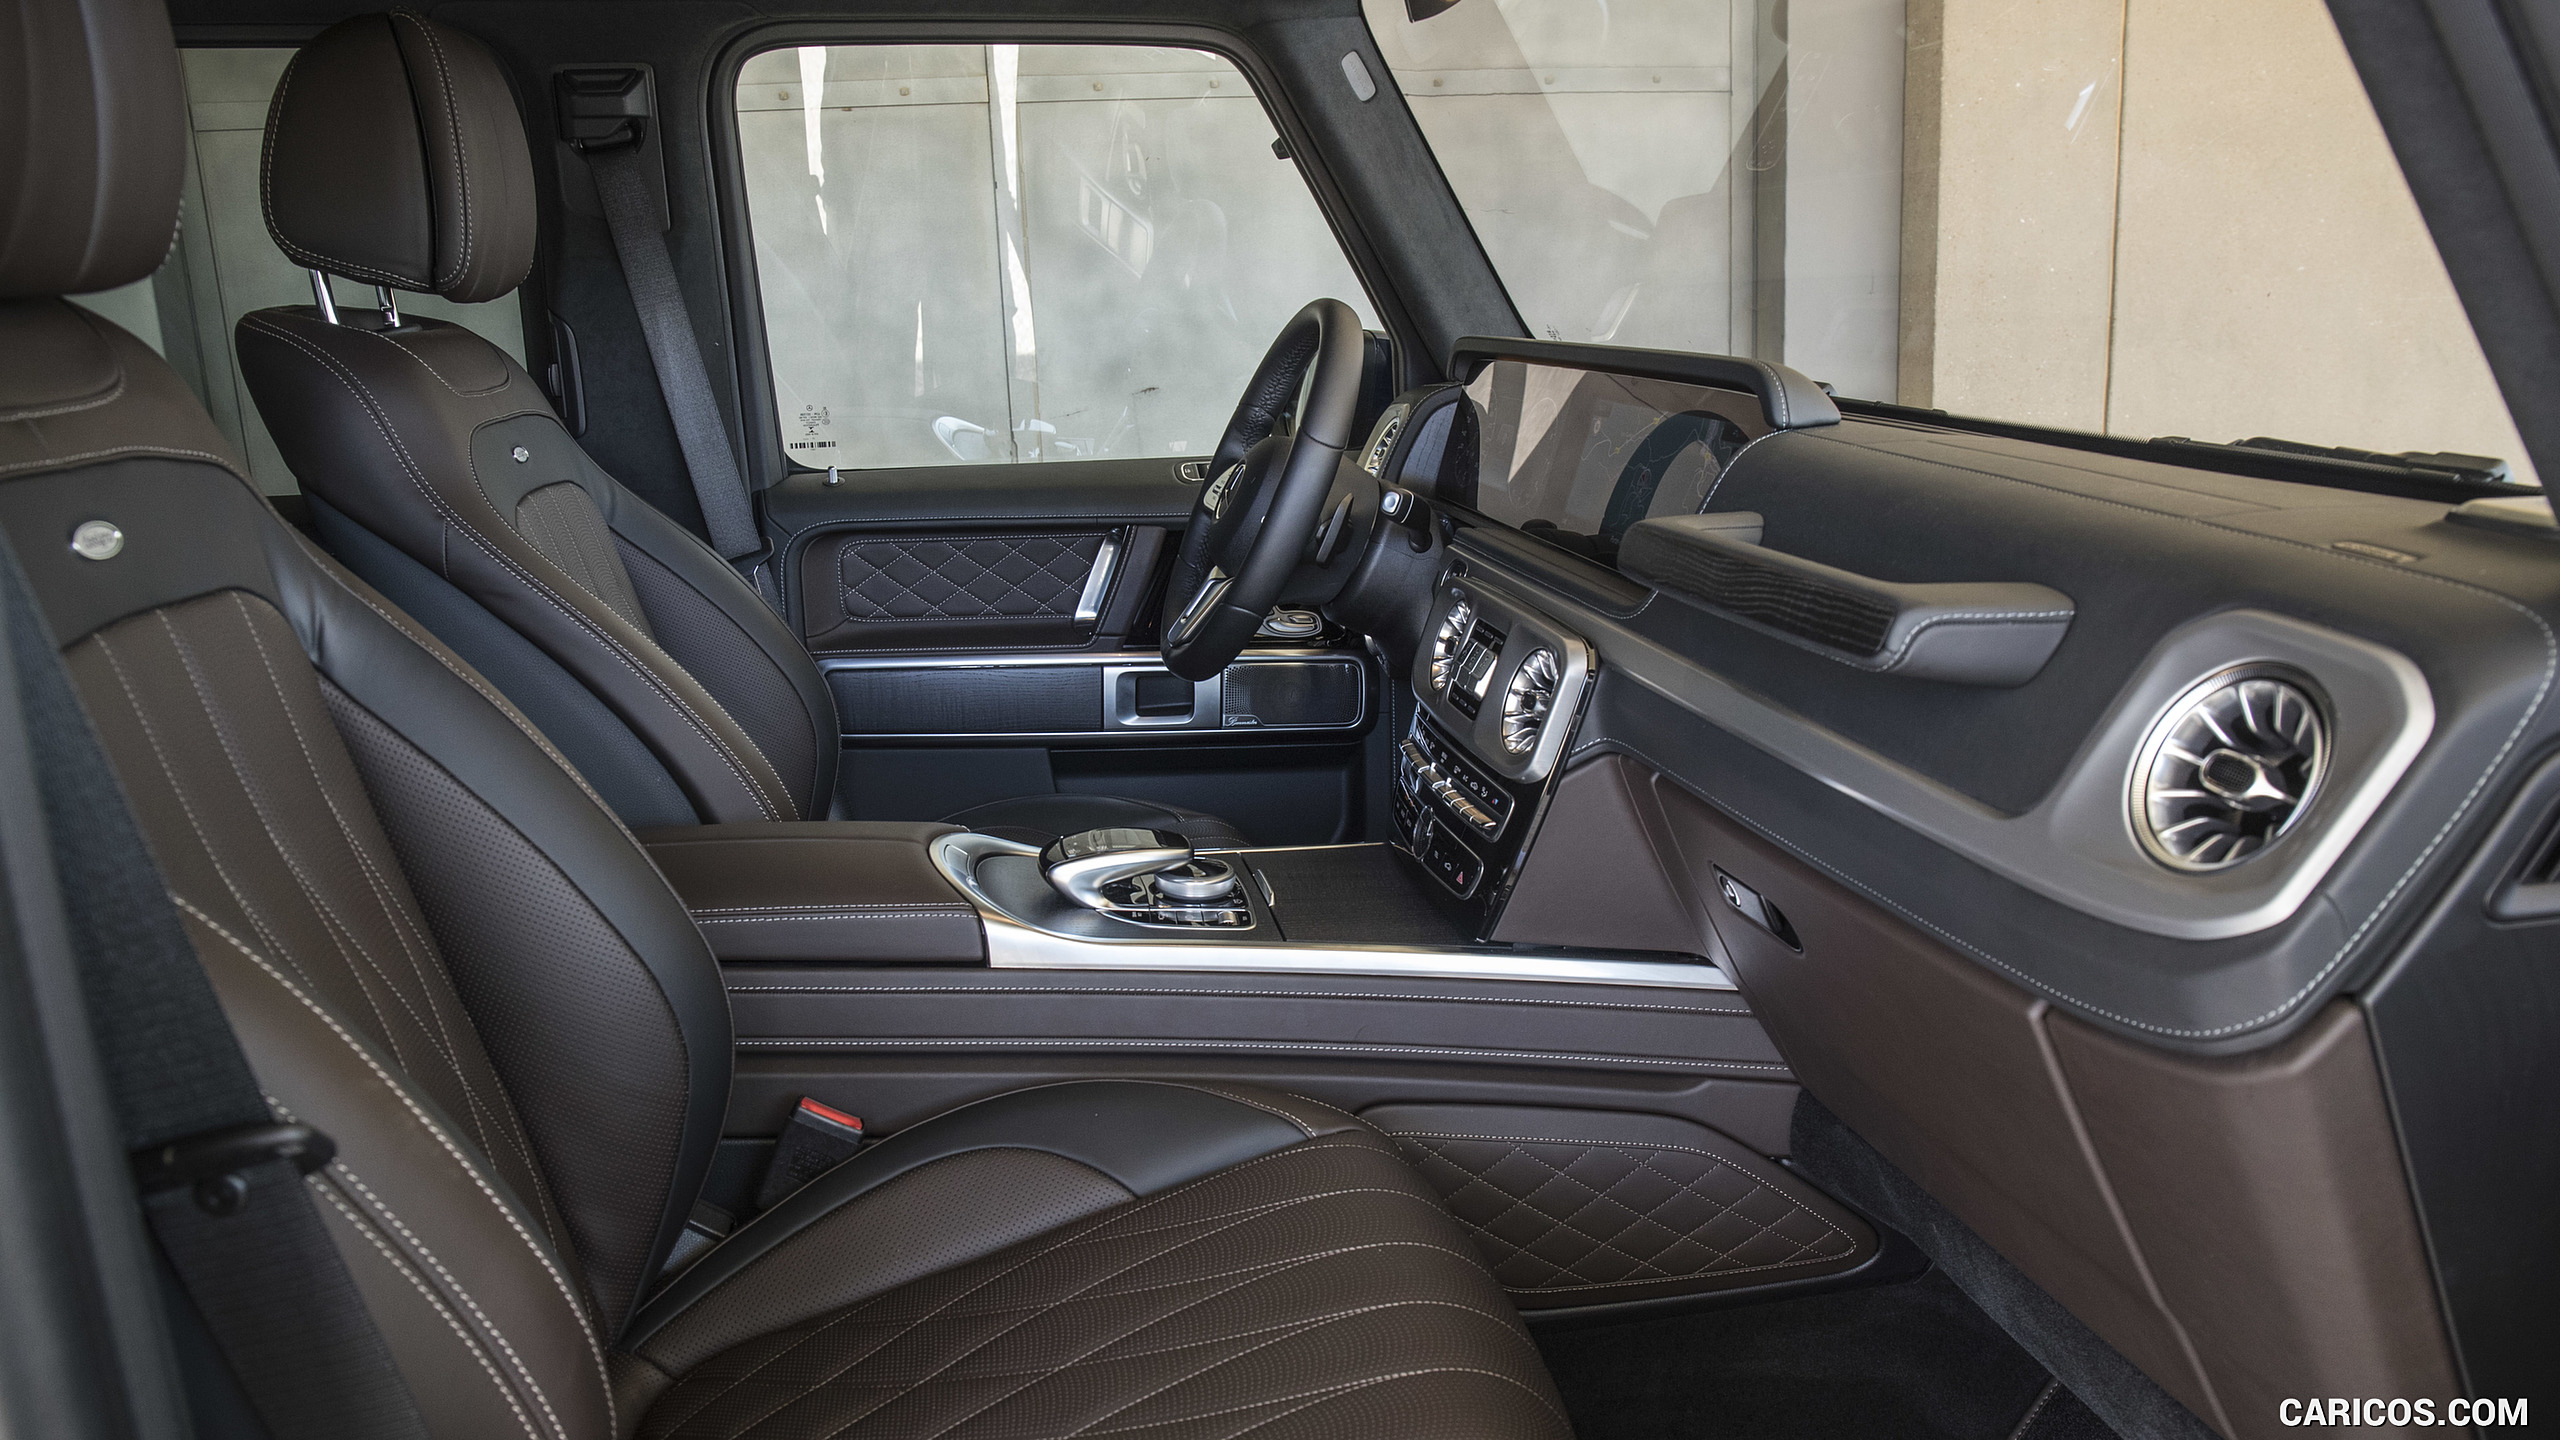 2019 Mercedes-Benz G-Class G550 - Interior, Front Seats, #244 of 397